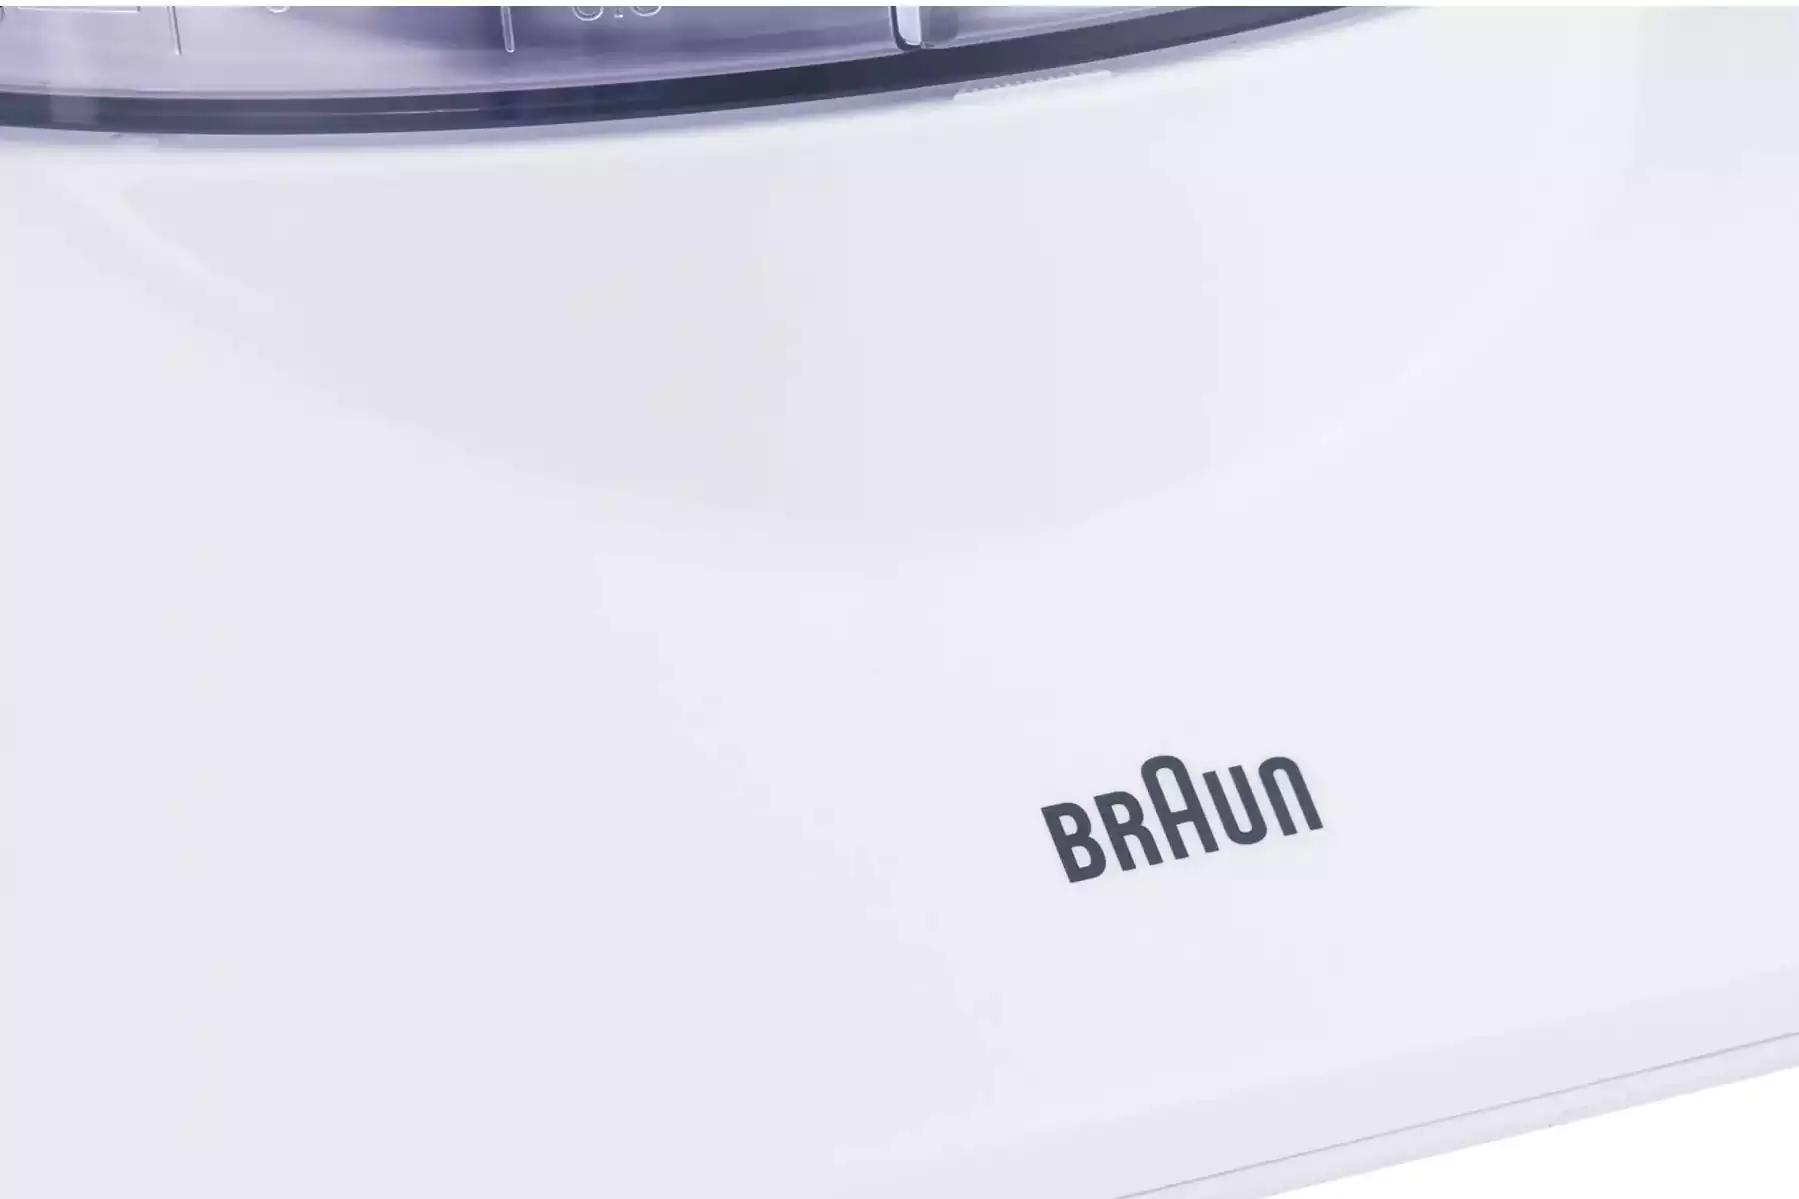 Braun Tribute Collection Electric Food Processor, 600 Watt, 2 Liter, Multipurpose, White and Green, FX3030 (B.TECH Warranty)